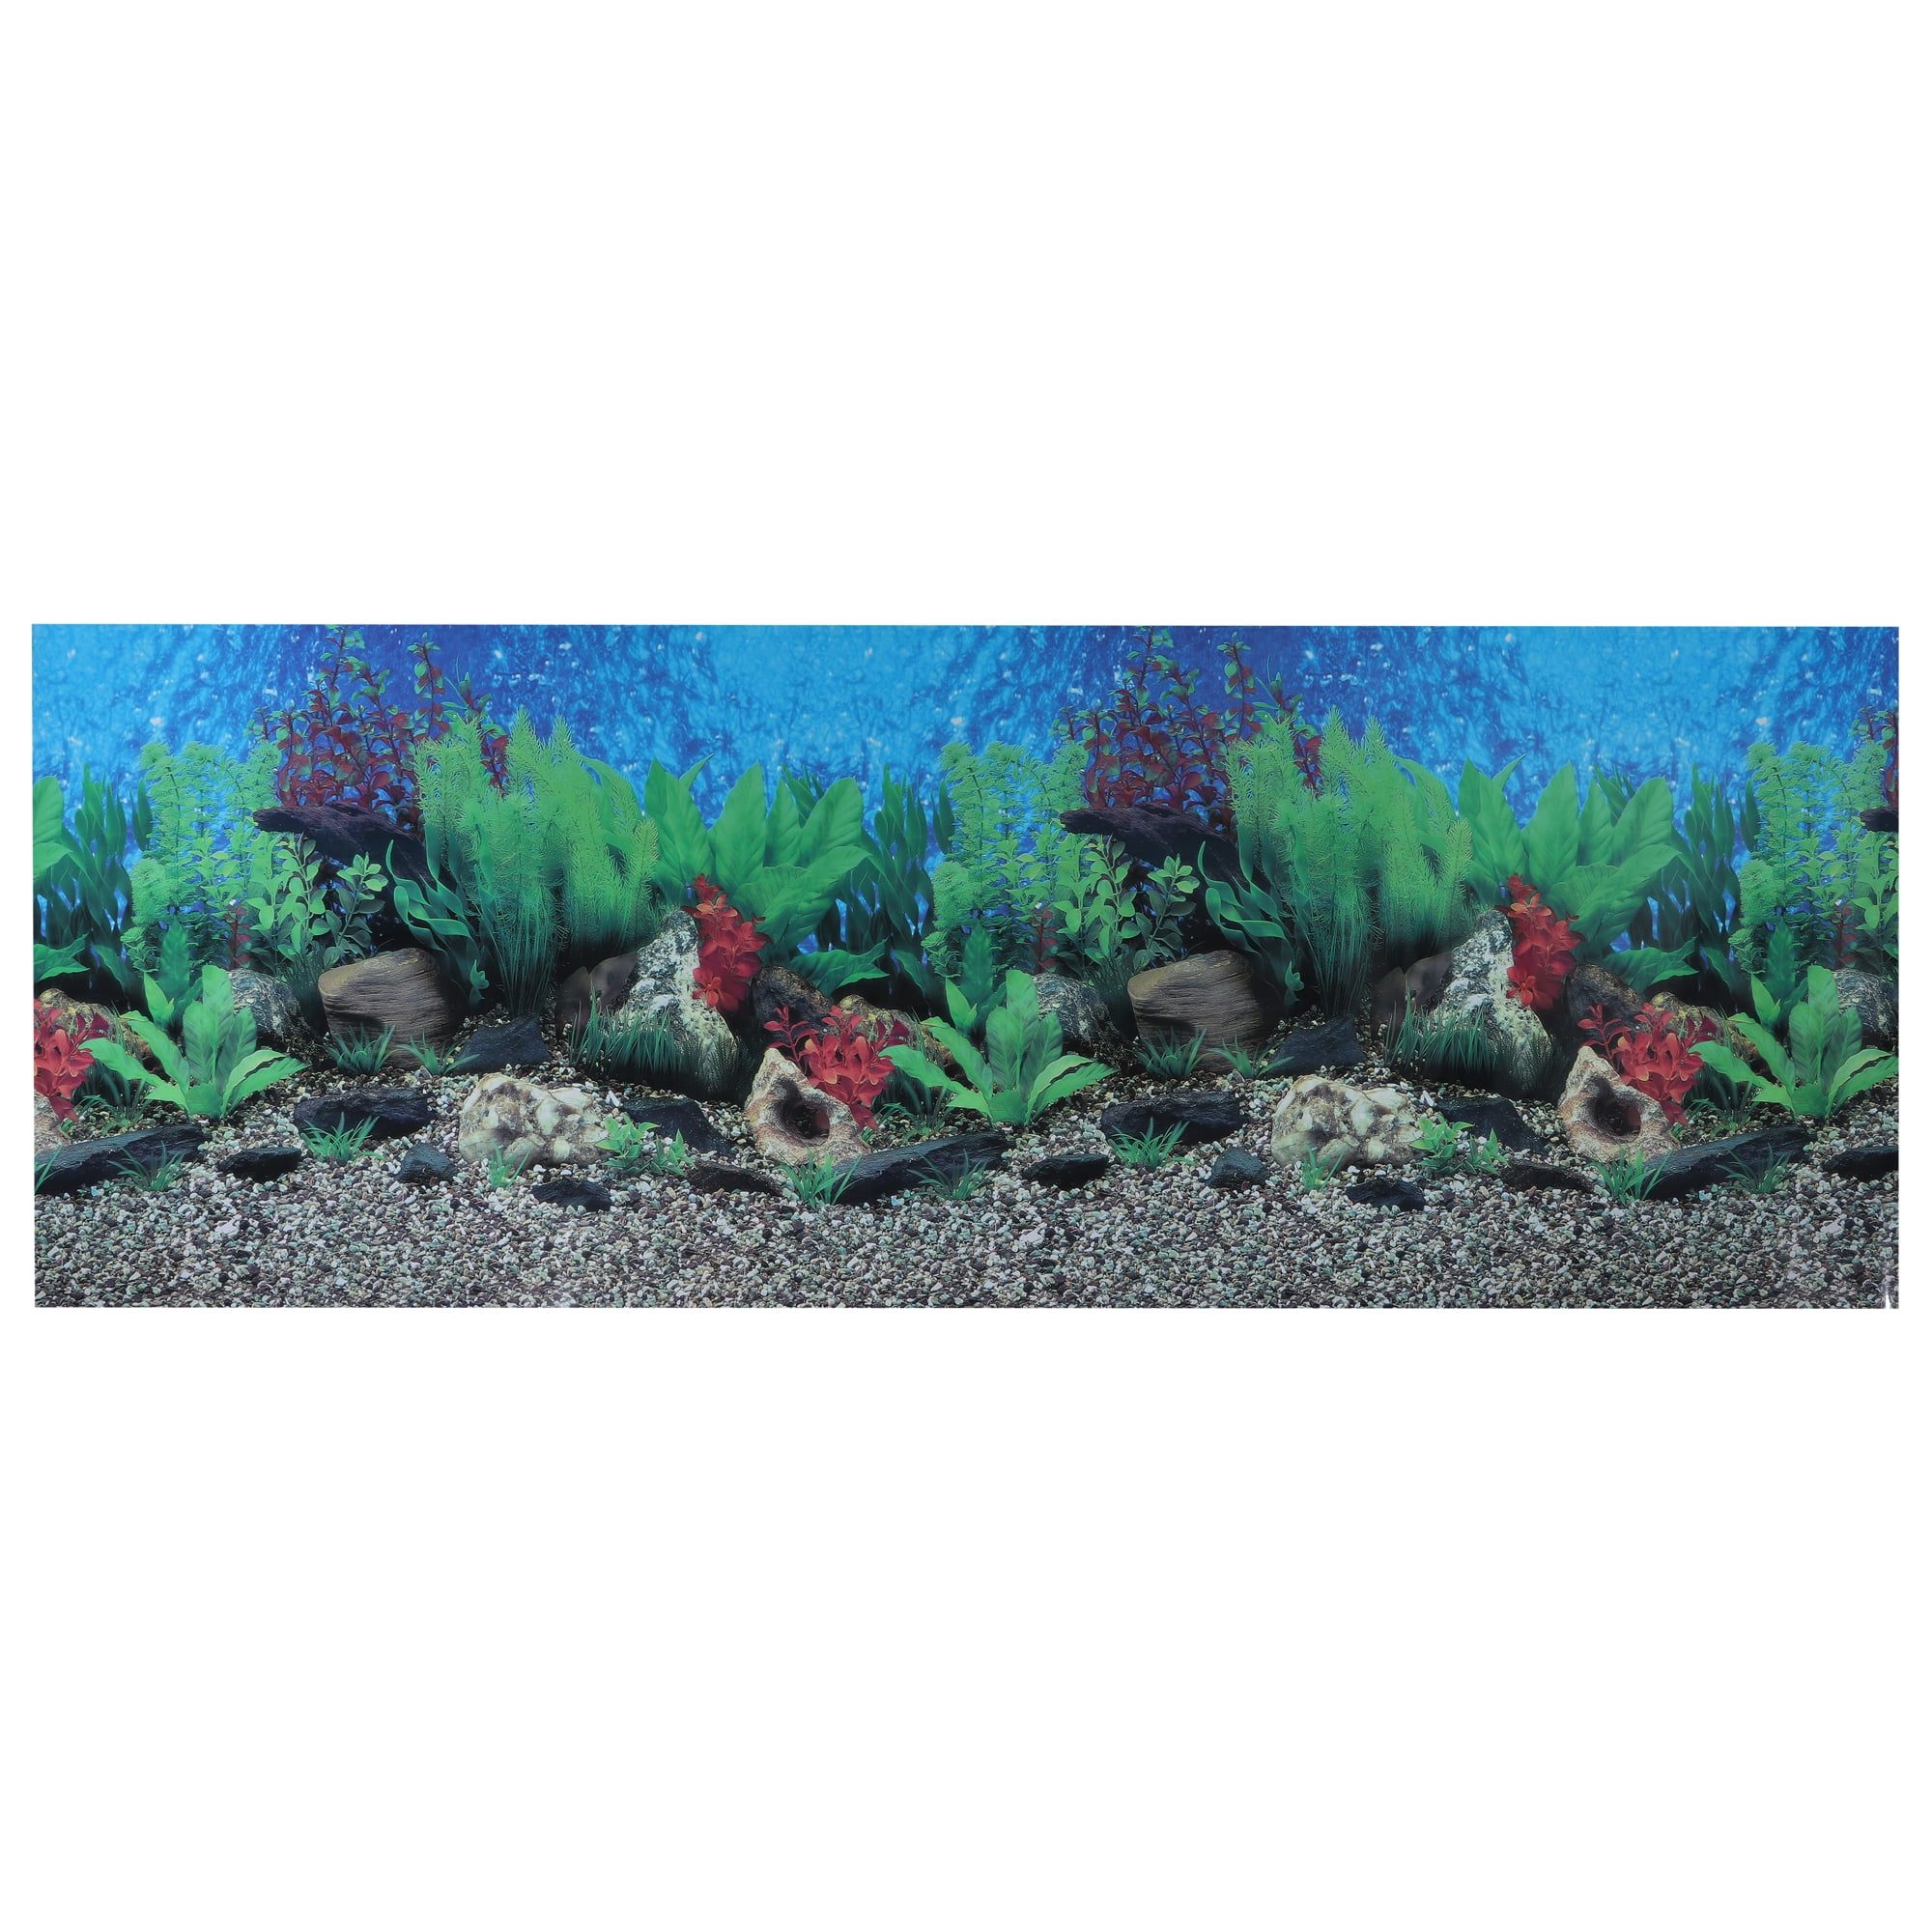 Unique Bargains Aquarium Background Poster Double-Sided Fish Tank Background Decorative Pictures PVC 40.16 inchx15.75 inch, Size: 40.16 x 15.75